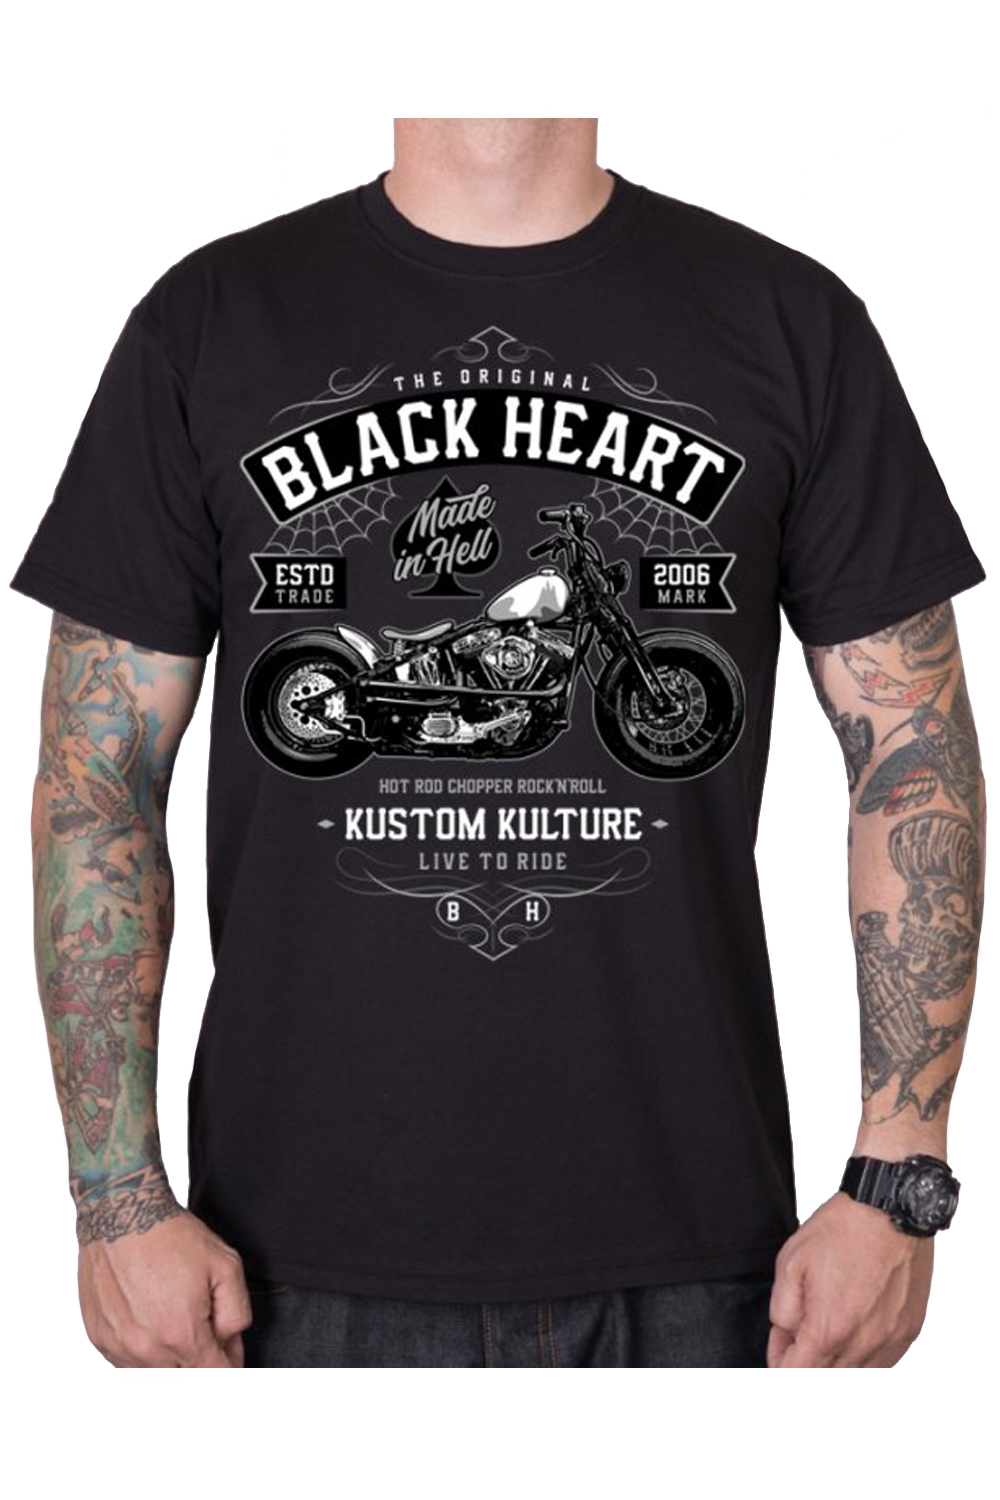 Moto Kult Chopper Motorrad Rock`n Roll Biker Live to Ride Black Heart T-Shirt